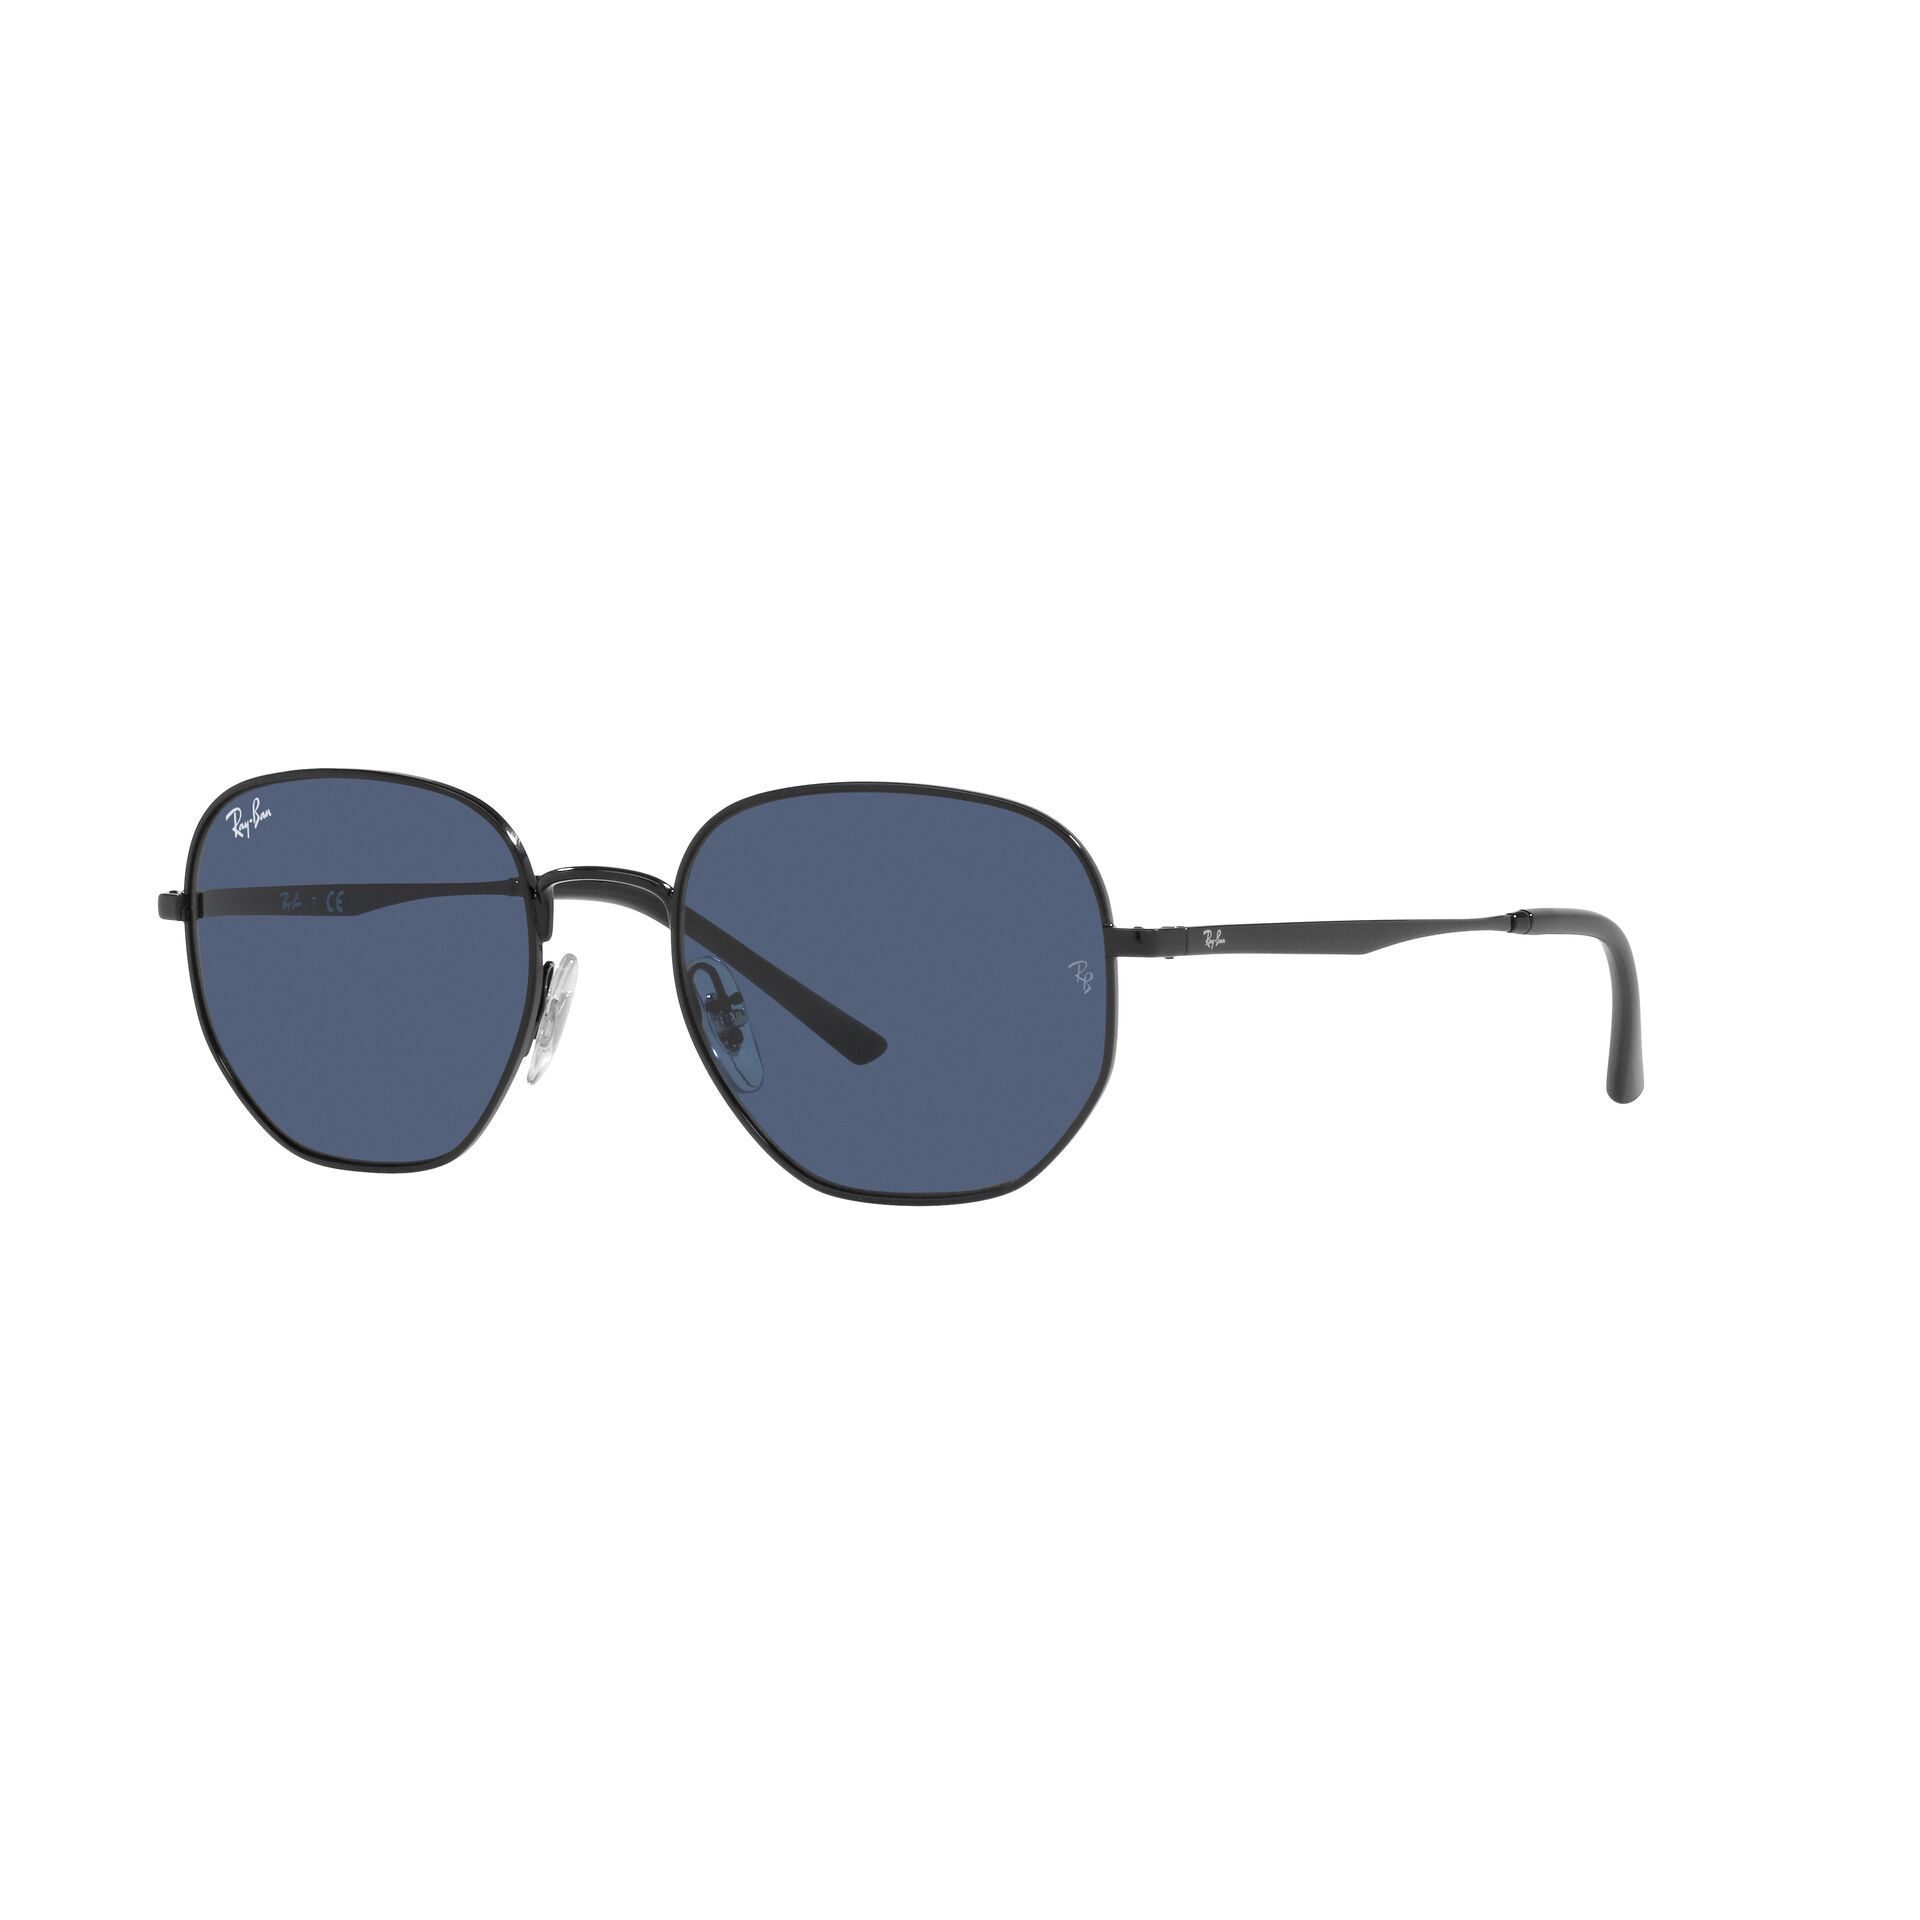 RB3682 Square Sunglasses 002 80 - size 51